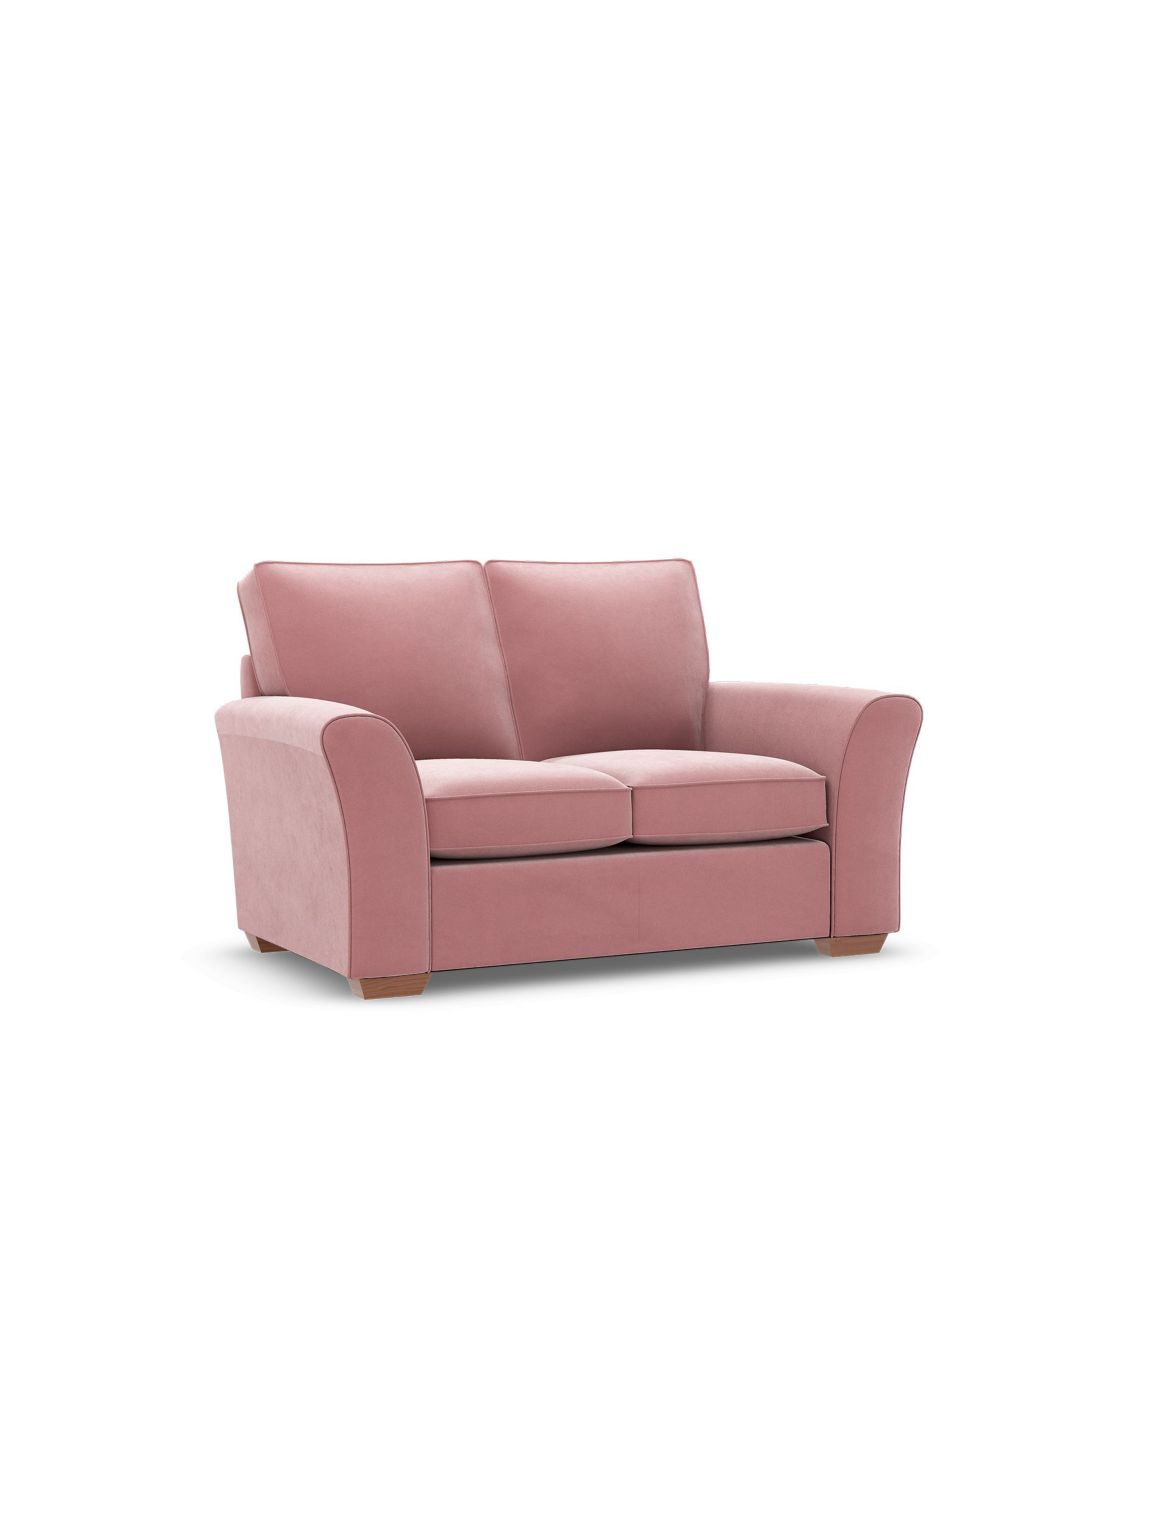 Lincoln Compact Sofa pink